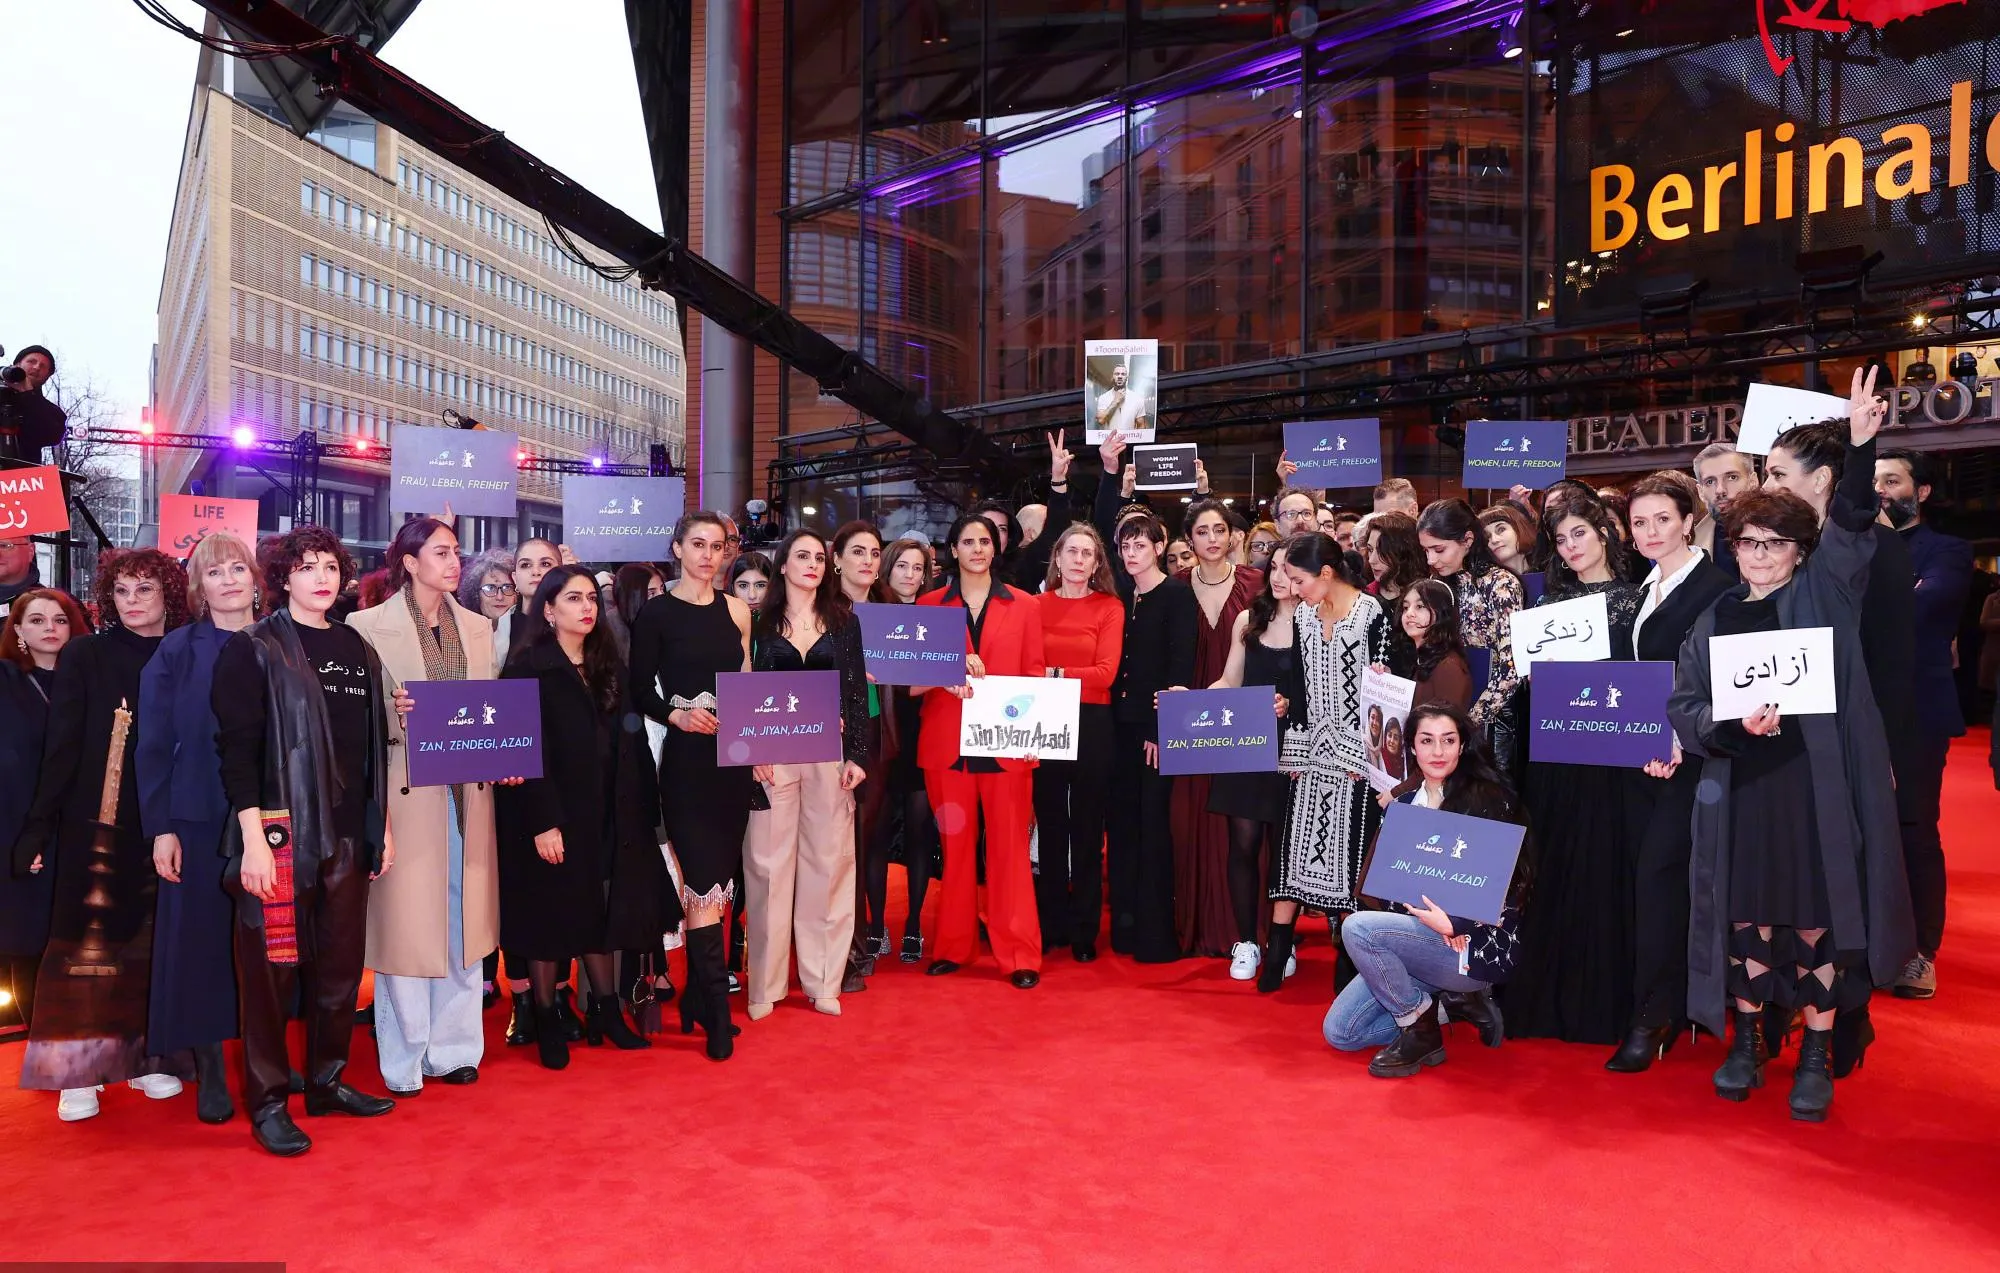 Kristen Stewart, Golshifteh Farahani, Mariette Rissenbeek and more at event in solidarity with Iranian women | FMV6